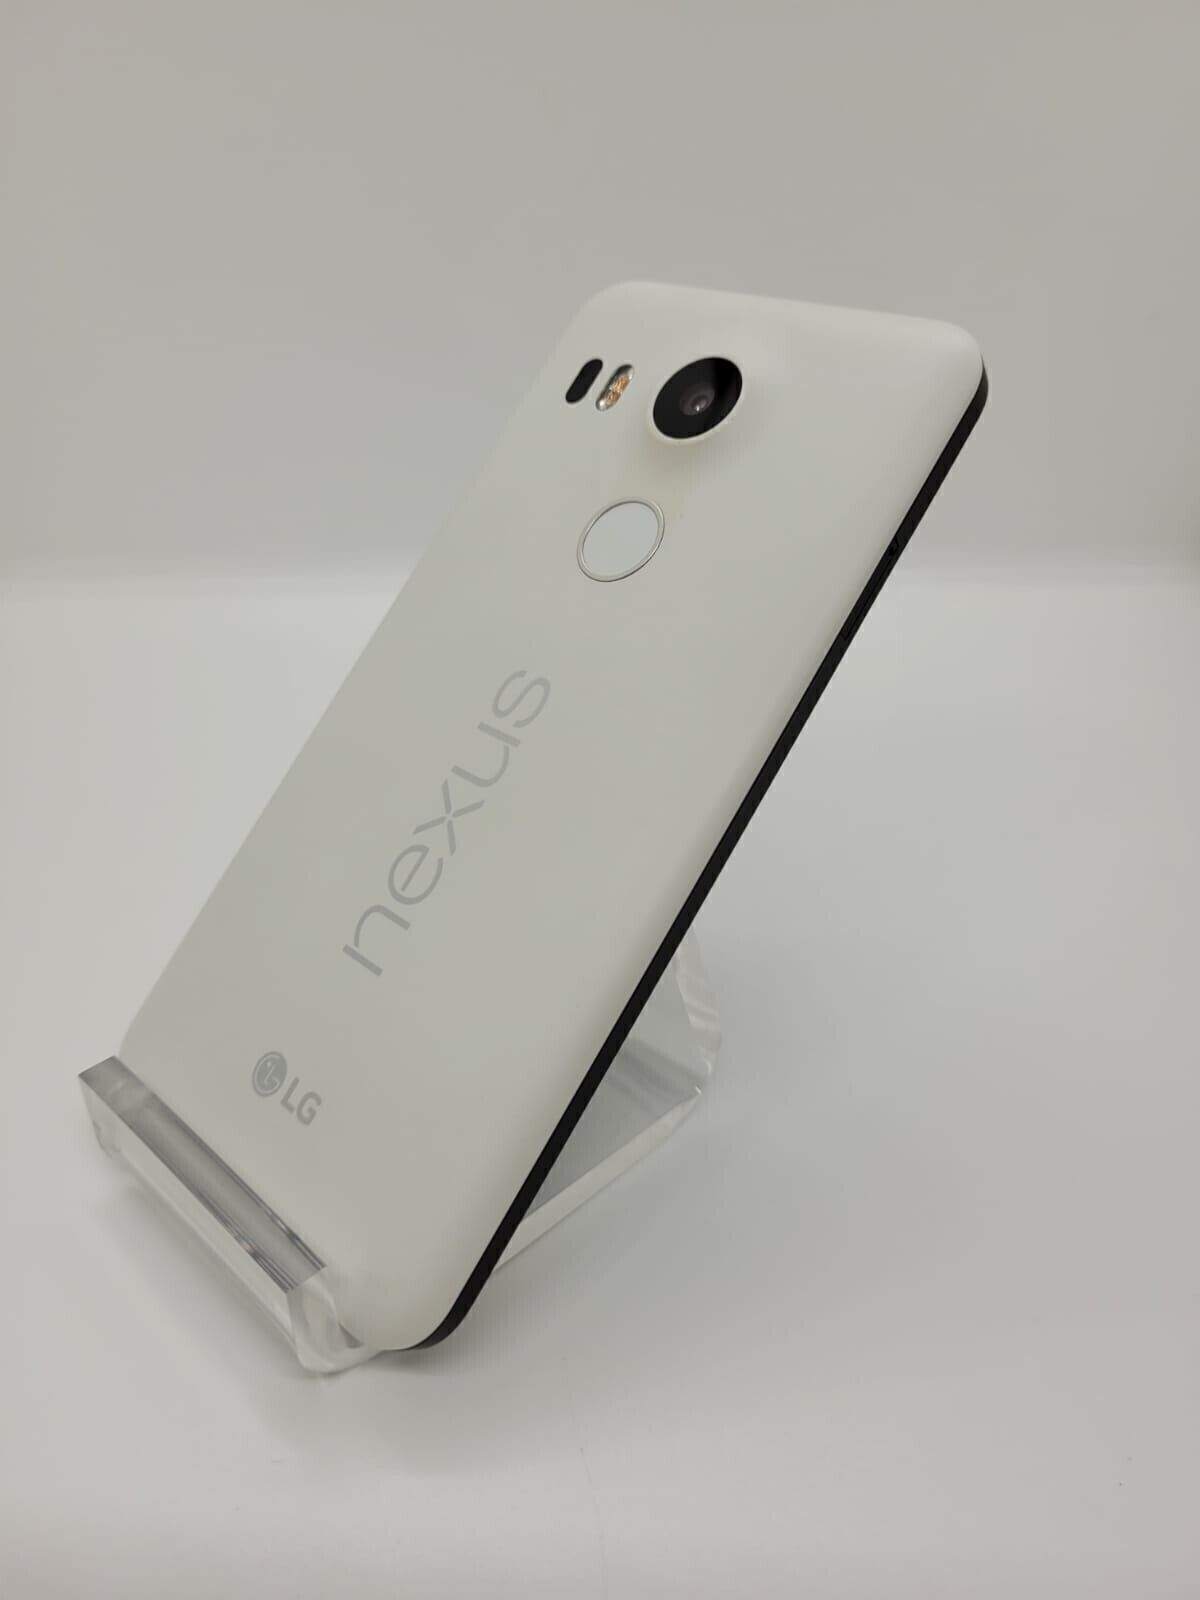 Nexus 5X 32GB White Factory Unlocked 4G LTE Smartphone H791